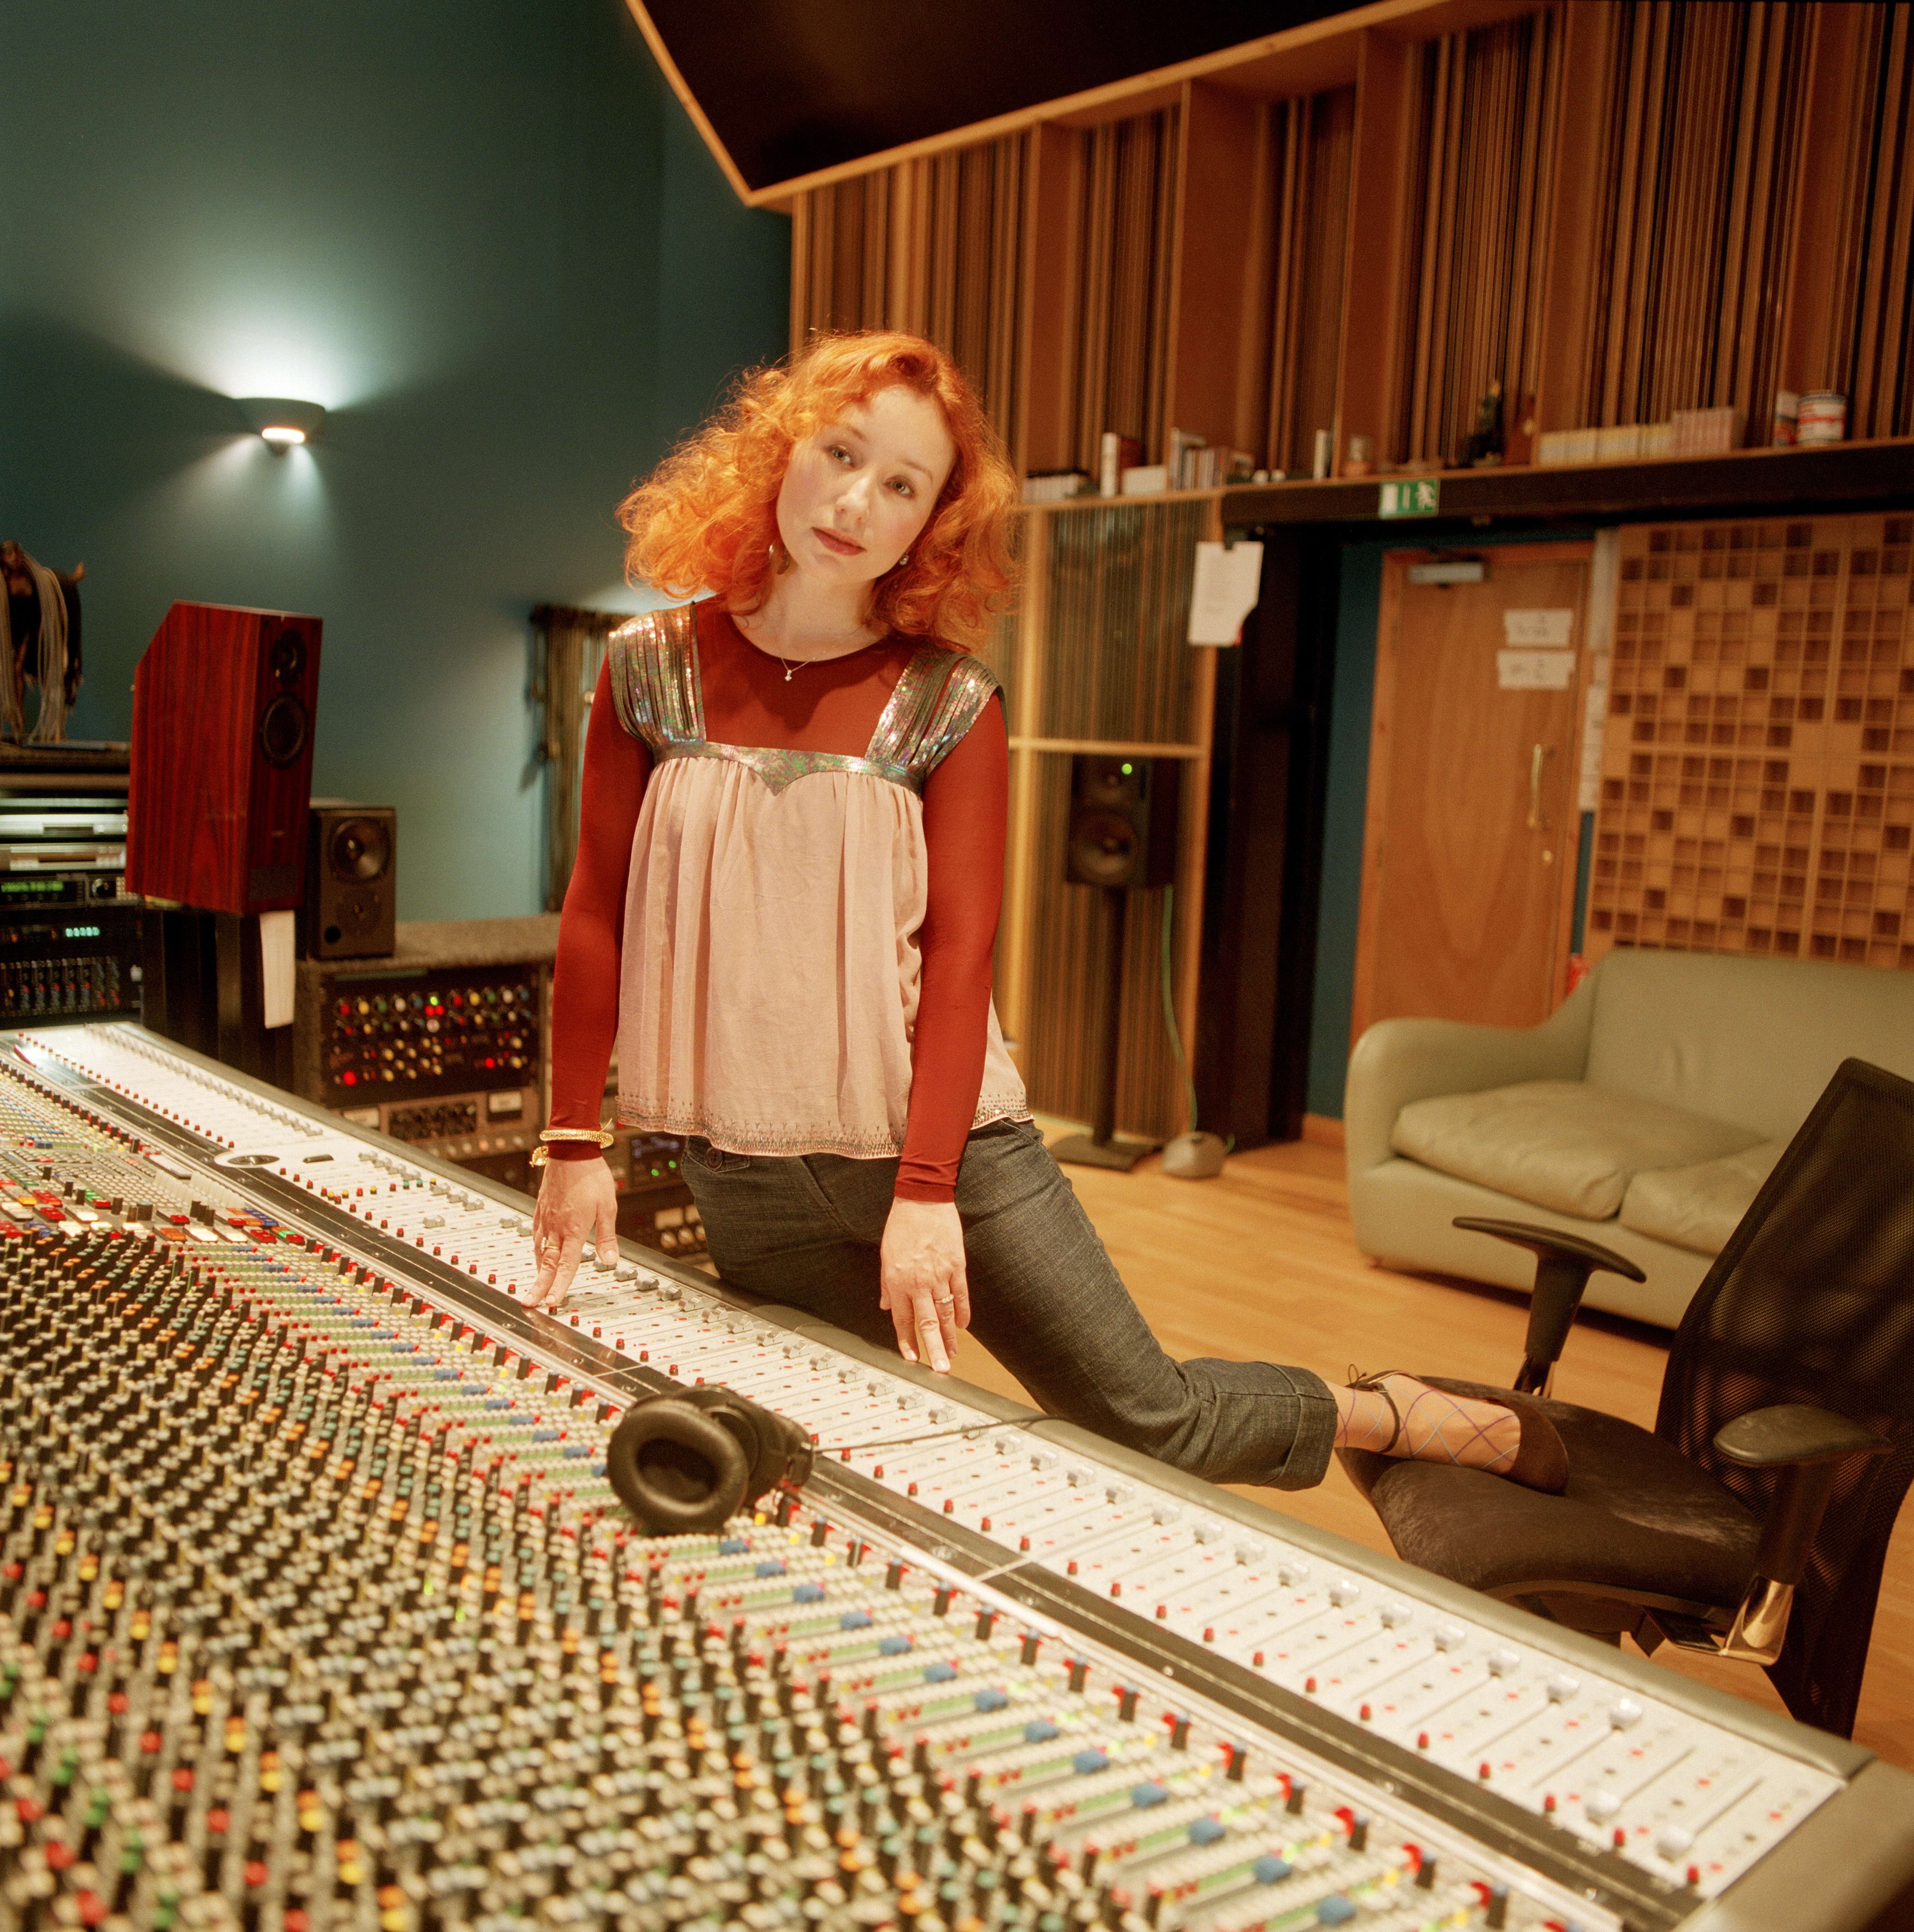 People 4200x4240 singer women redhead studio mixing consoles Tori Amos women indoors indoors